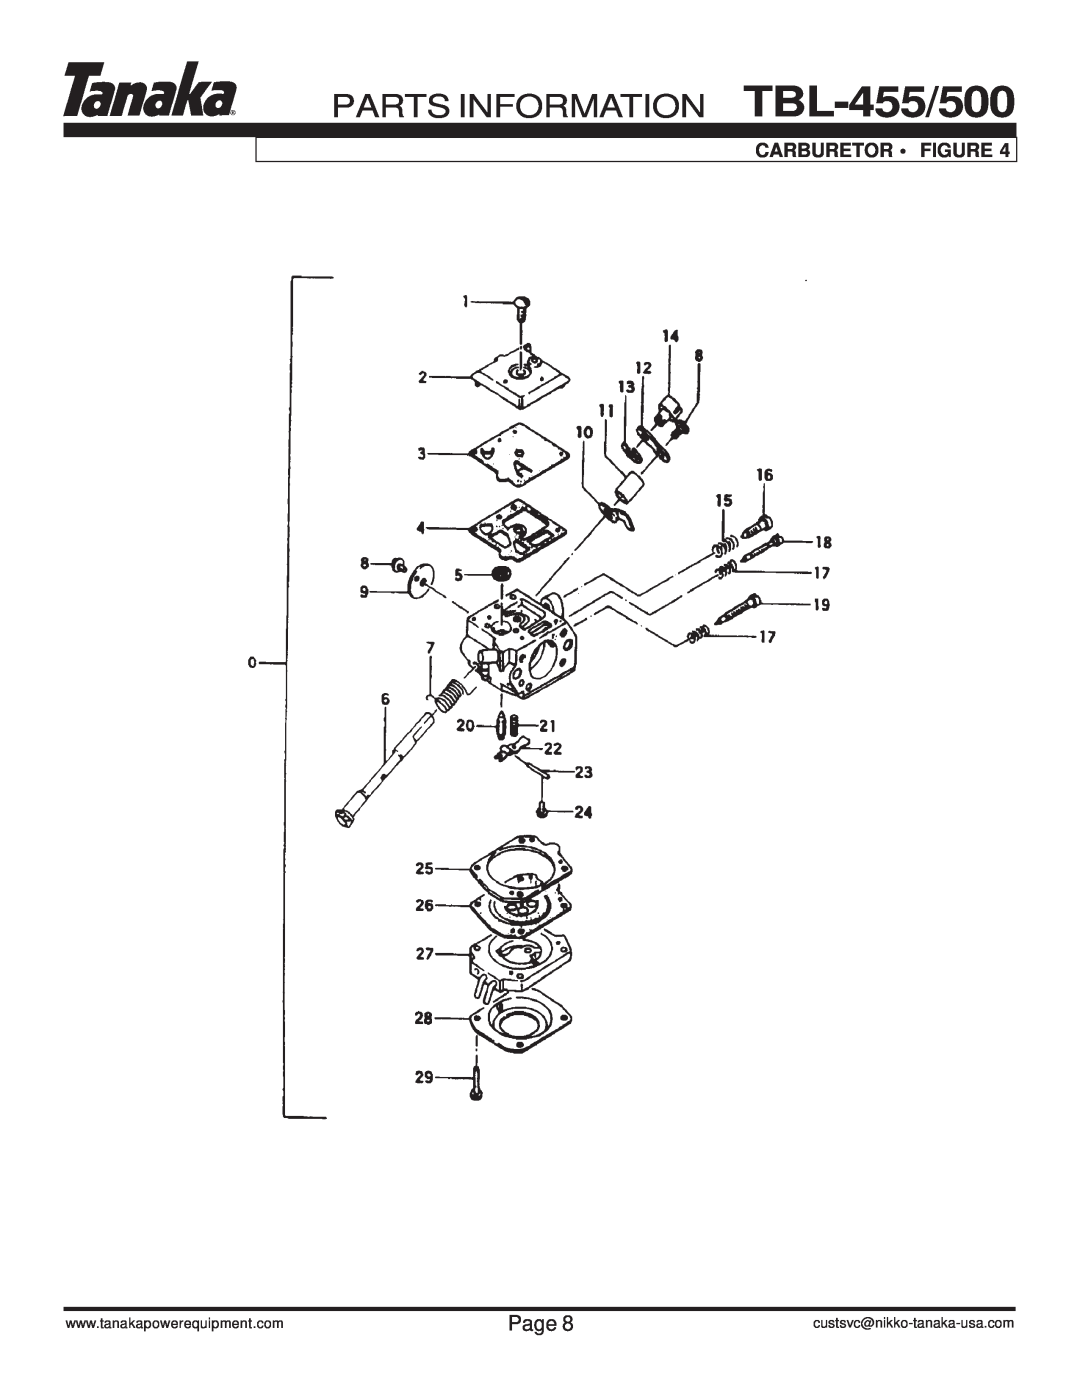 Tanaka manual Carburetor Figure, PARTS INFORMATION TBL-455/500, Page 